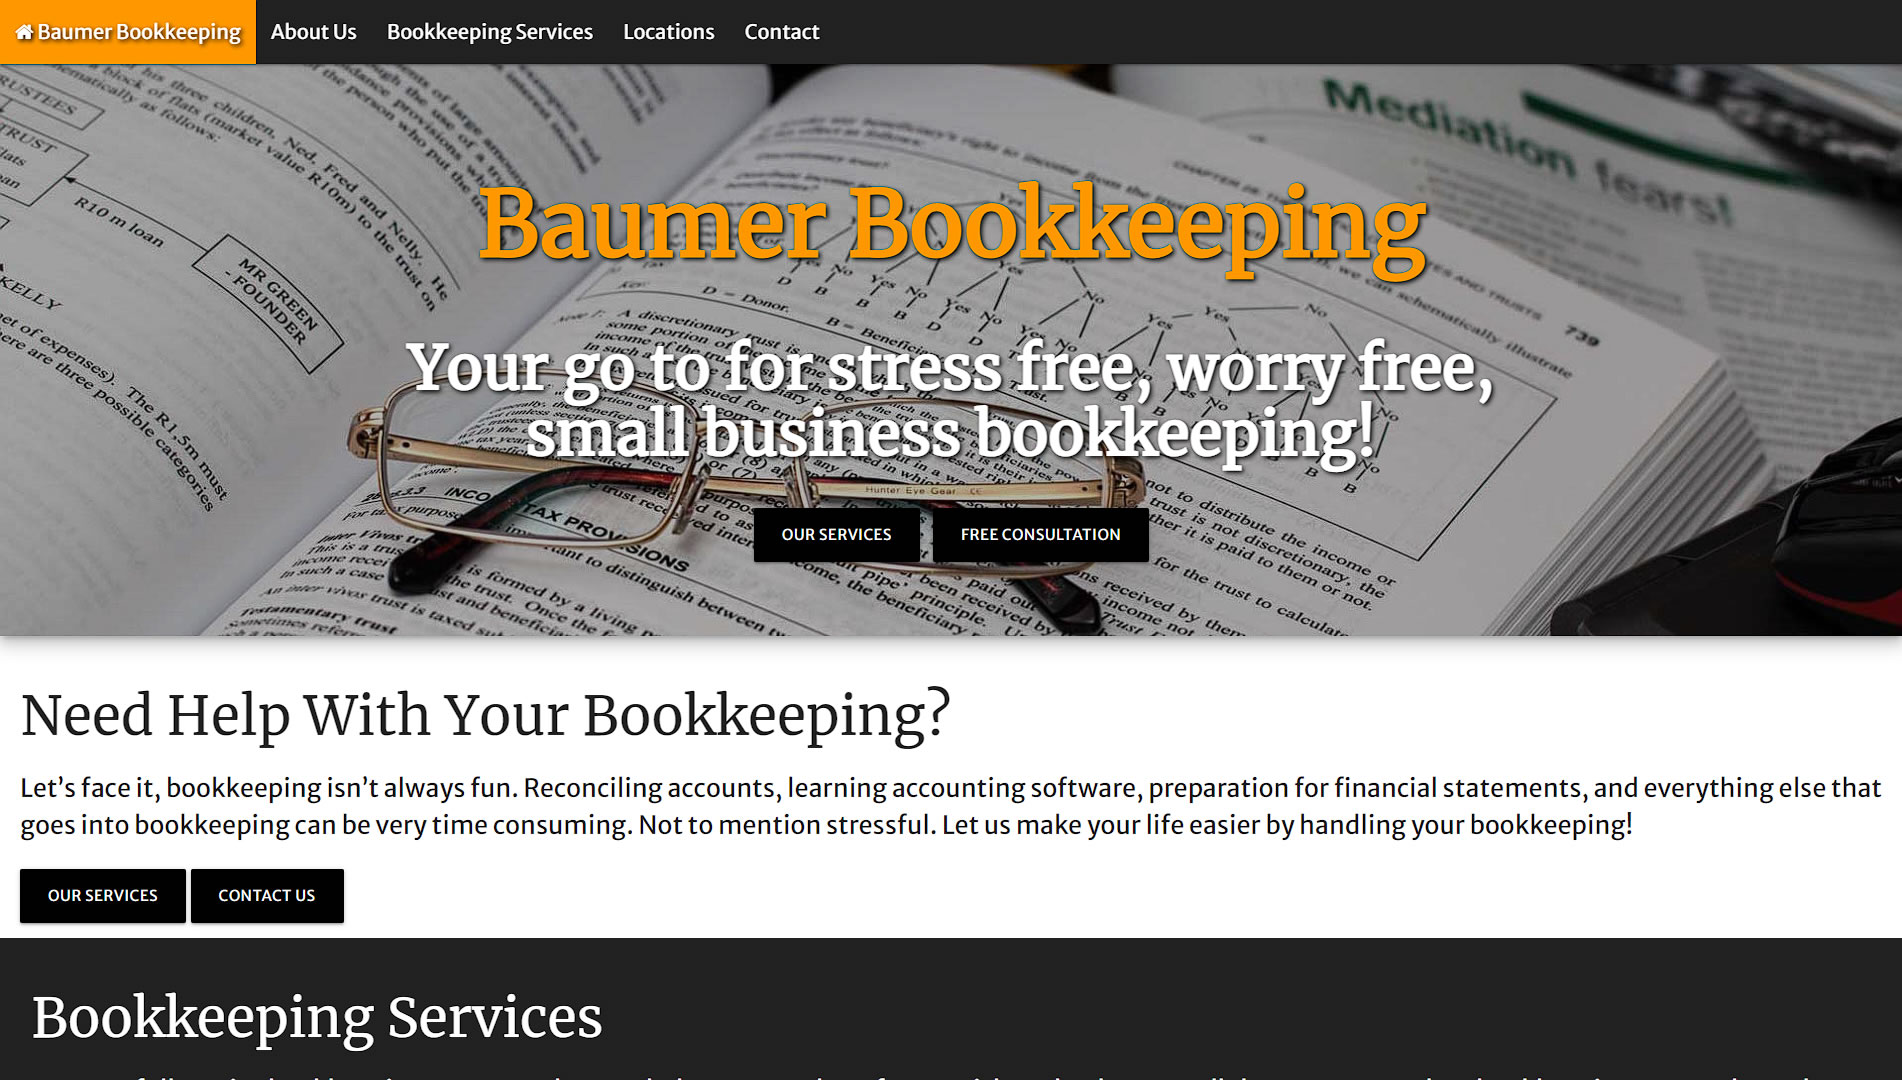 Baumer Bookkeeping